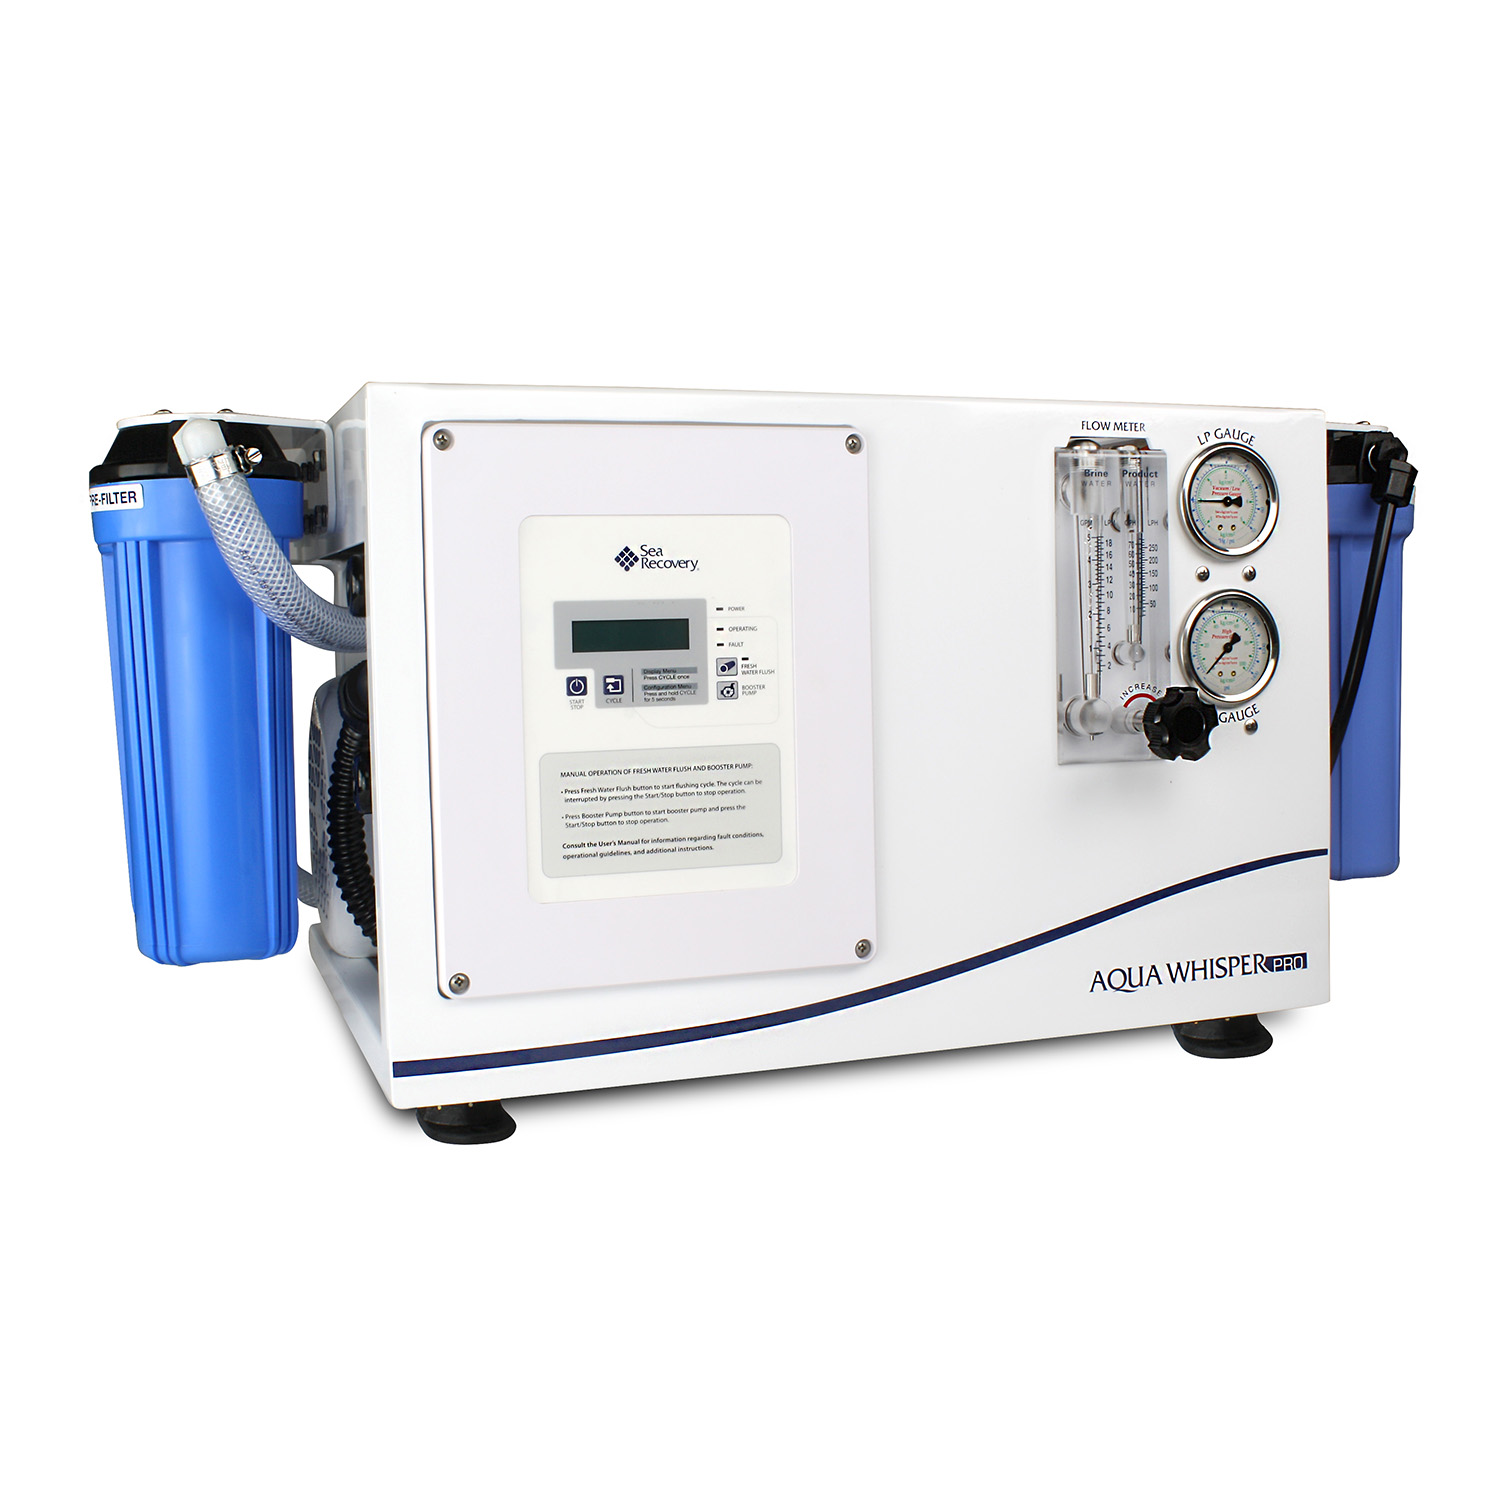 Aqua Whisper Pro 1800-2 Compact watermaker